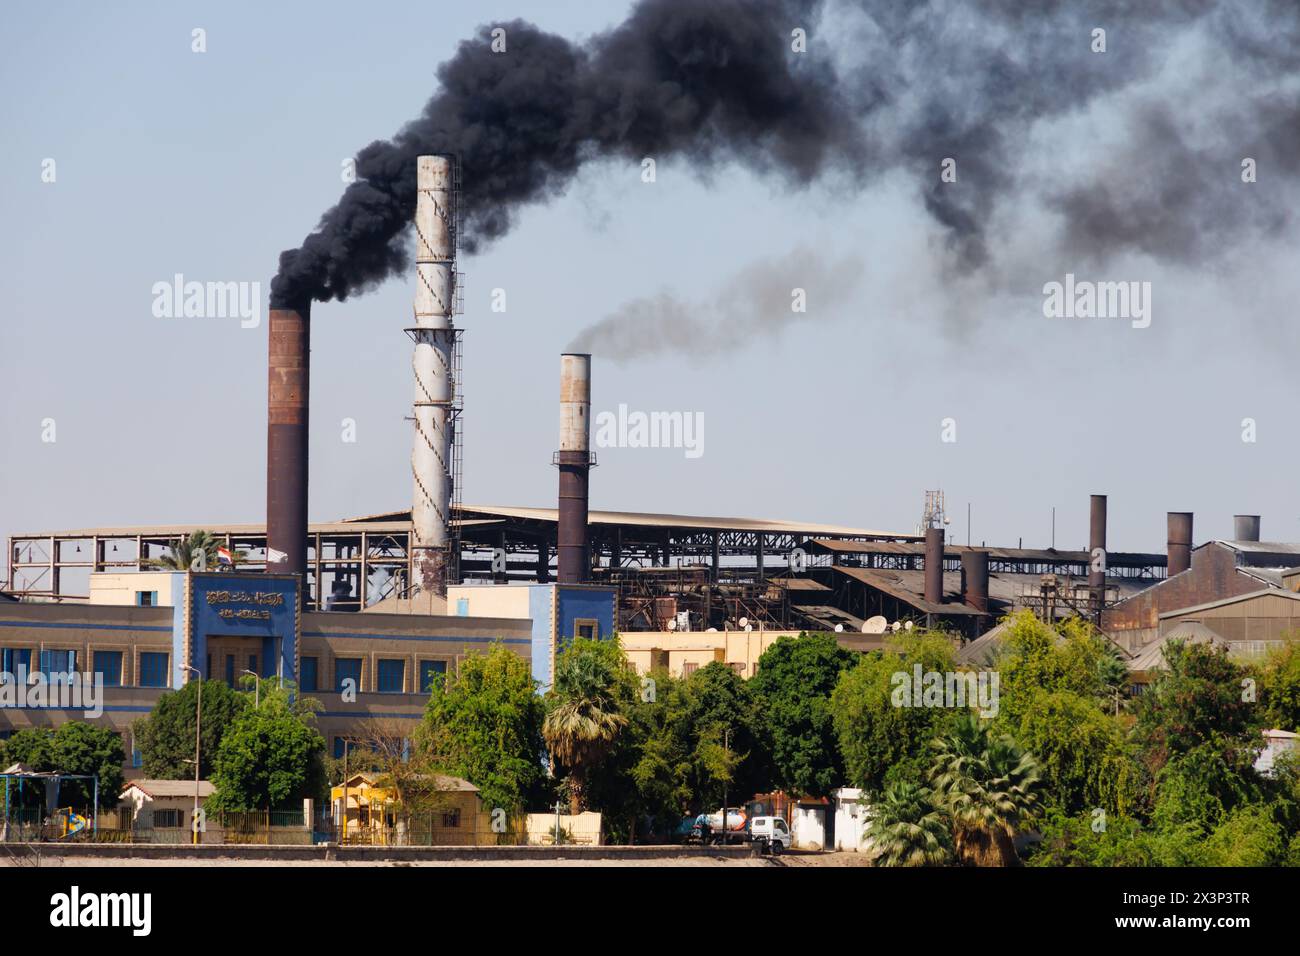 Sugar mill factory belching black smoke pollution from its chimneys. Near Esna, Egypt Stock Photo